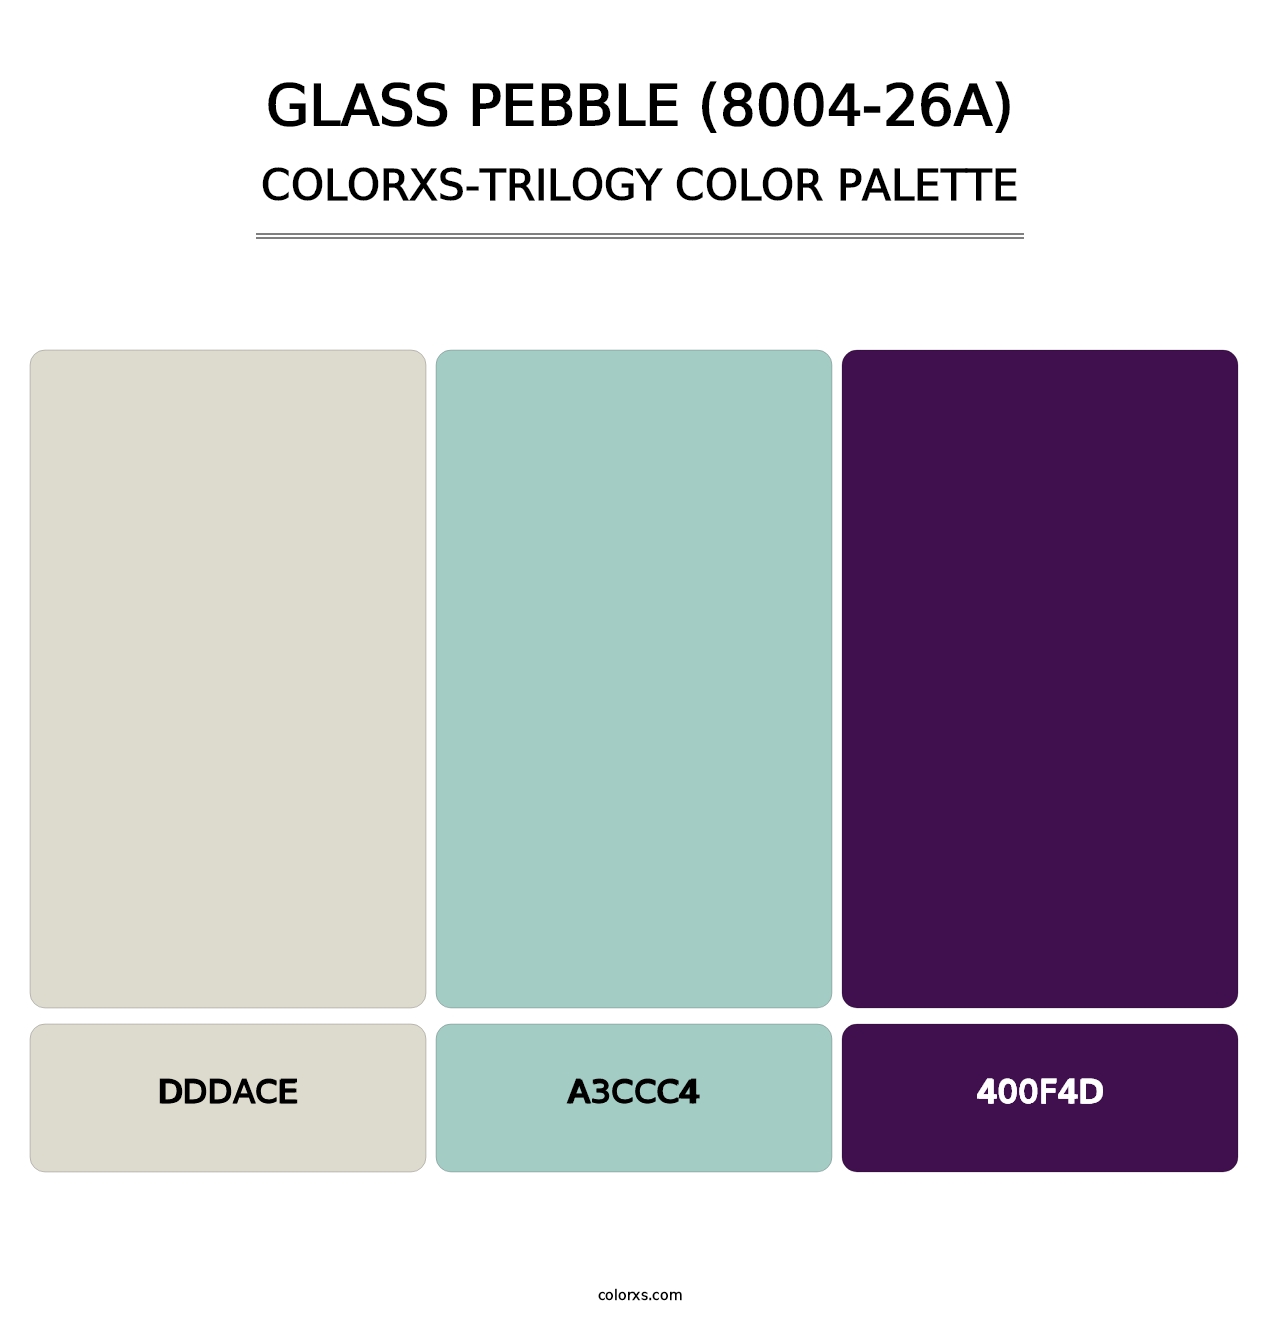 Glass Pebble (8004-26A) - Colorxs Trilogy Palette